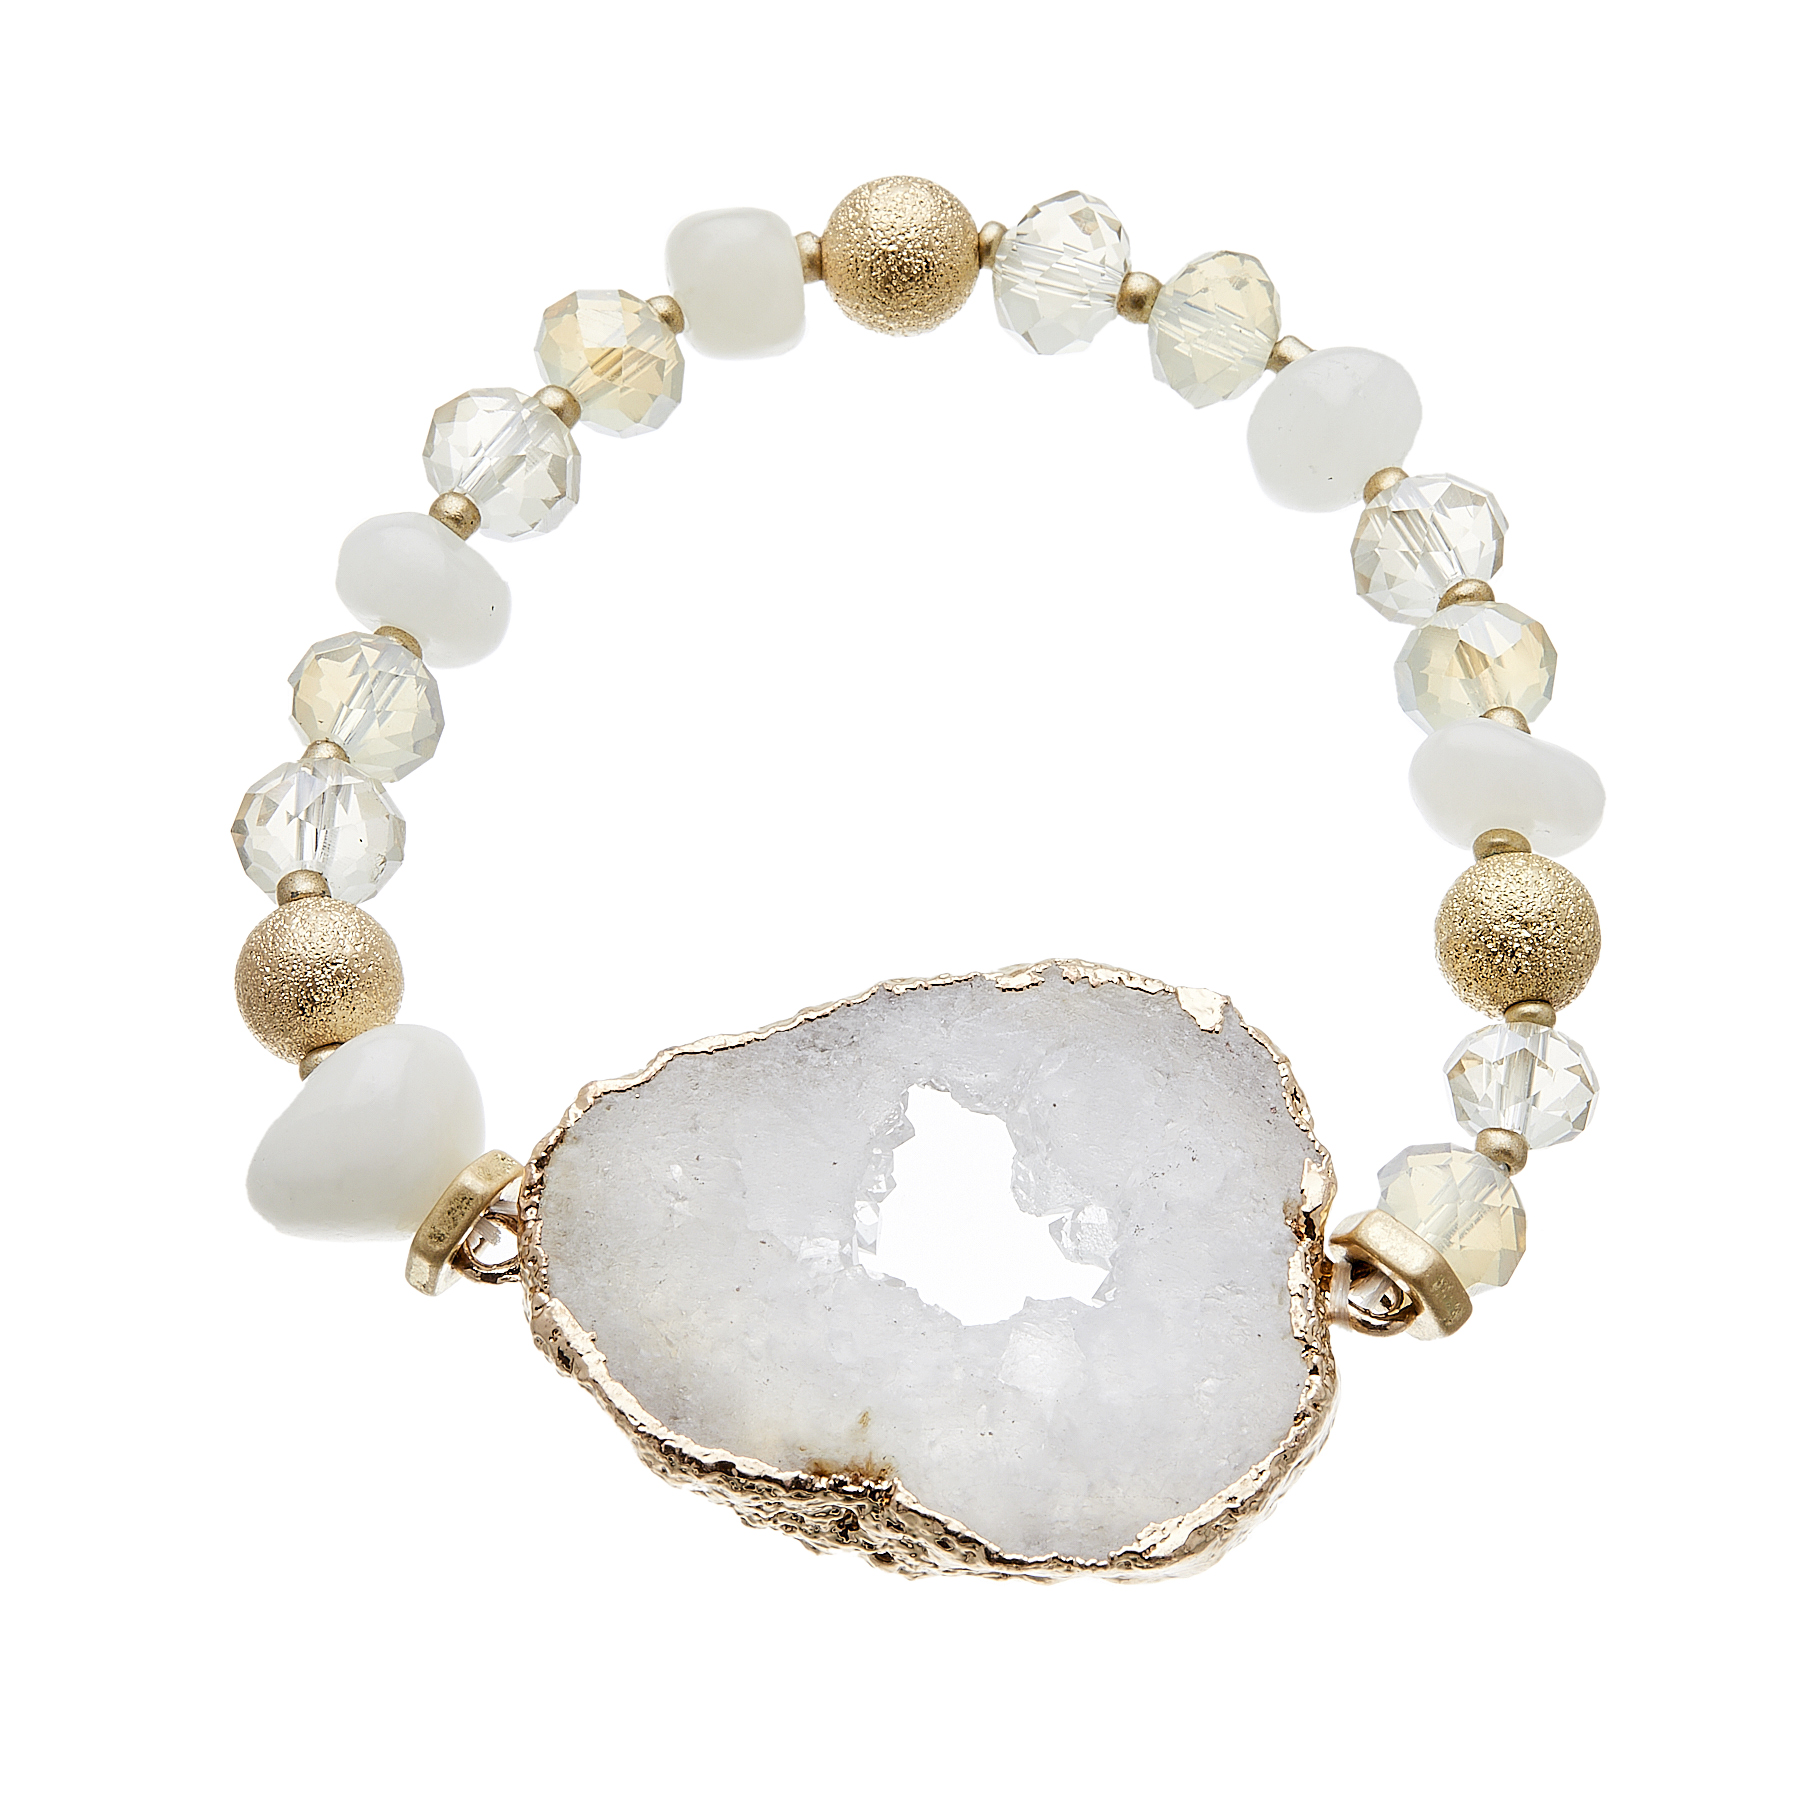 Bracelet with white agate beads and white druzy quartz stone - Jae W